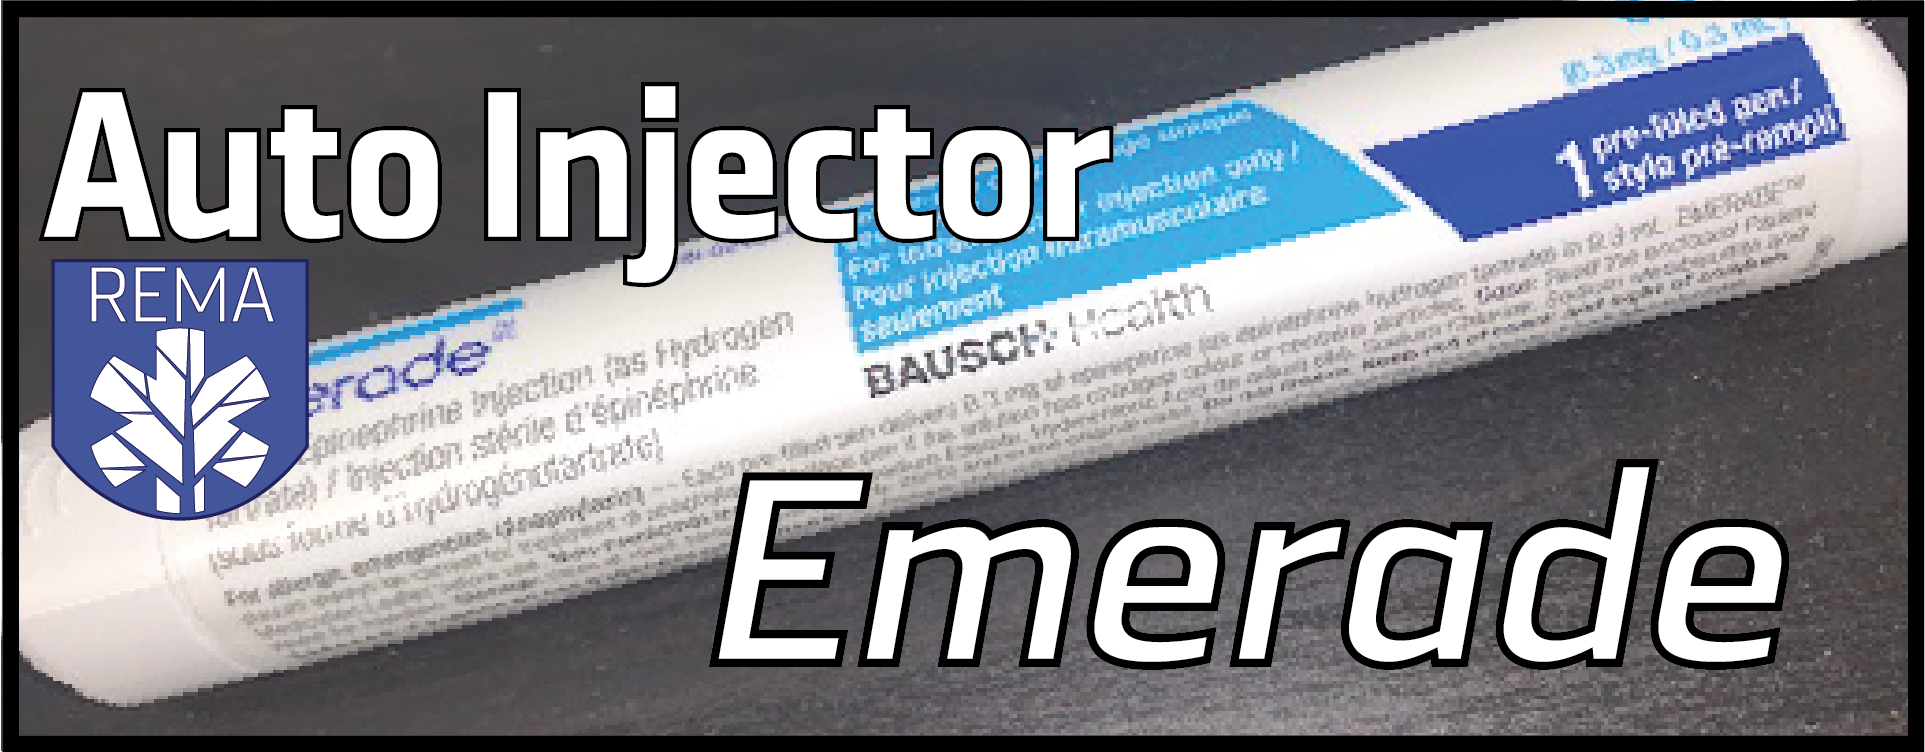 Emerade Training: Epi - Auto Injector